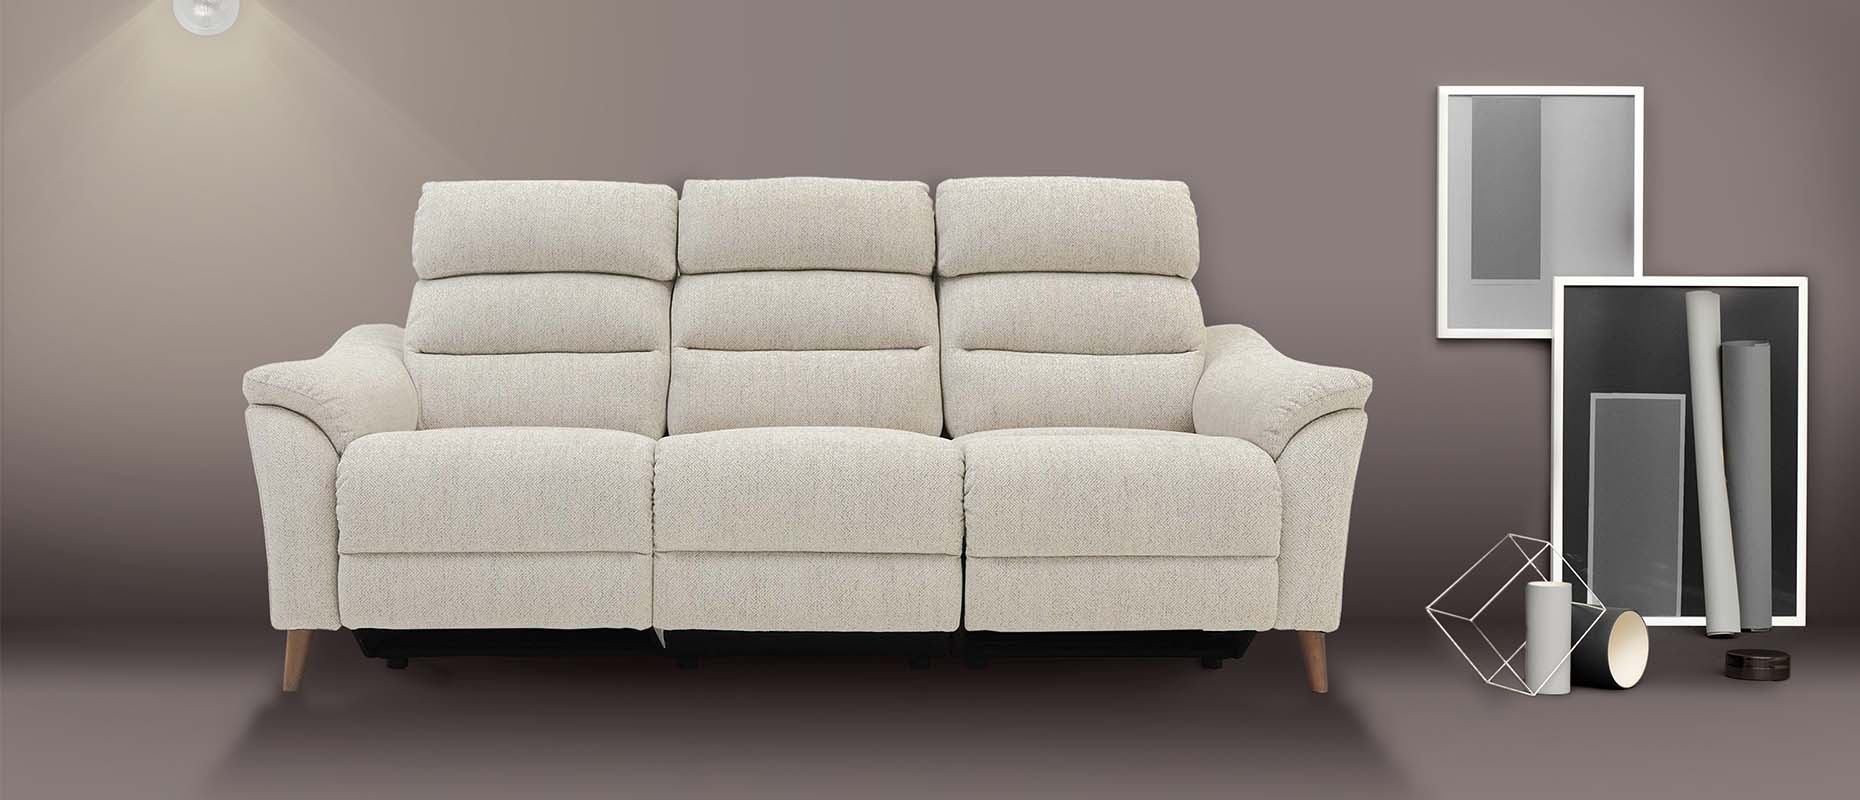 Merritt Sofa Collection | Forrest Furnishing Glasgow's finest furniture ...